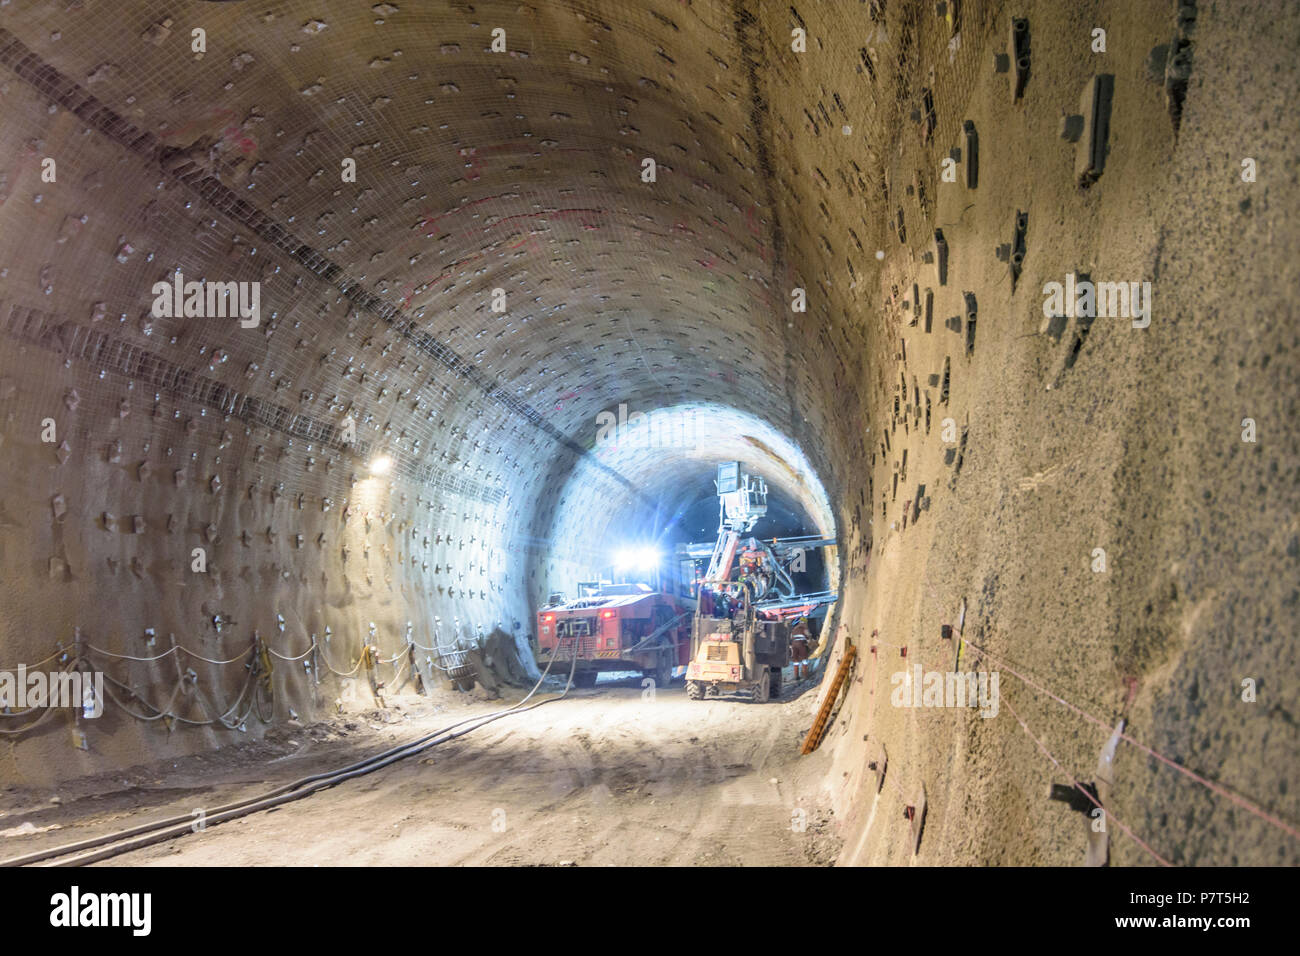 Spital am Semmering: Drilling the blast holes at Semmering-Basistunnel (Semmering Base Tunnel) of Semmeringbahn (Semmering railway) under construction Stock Photo